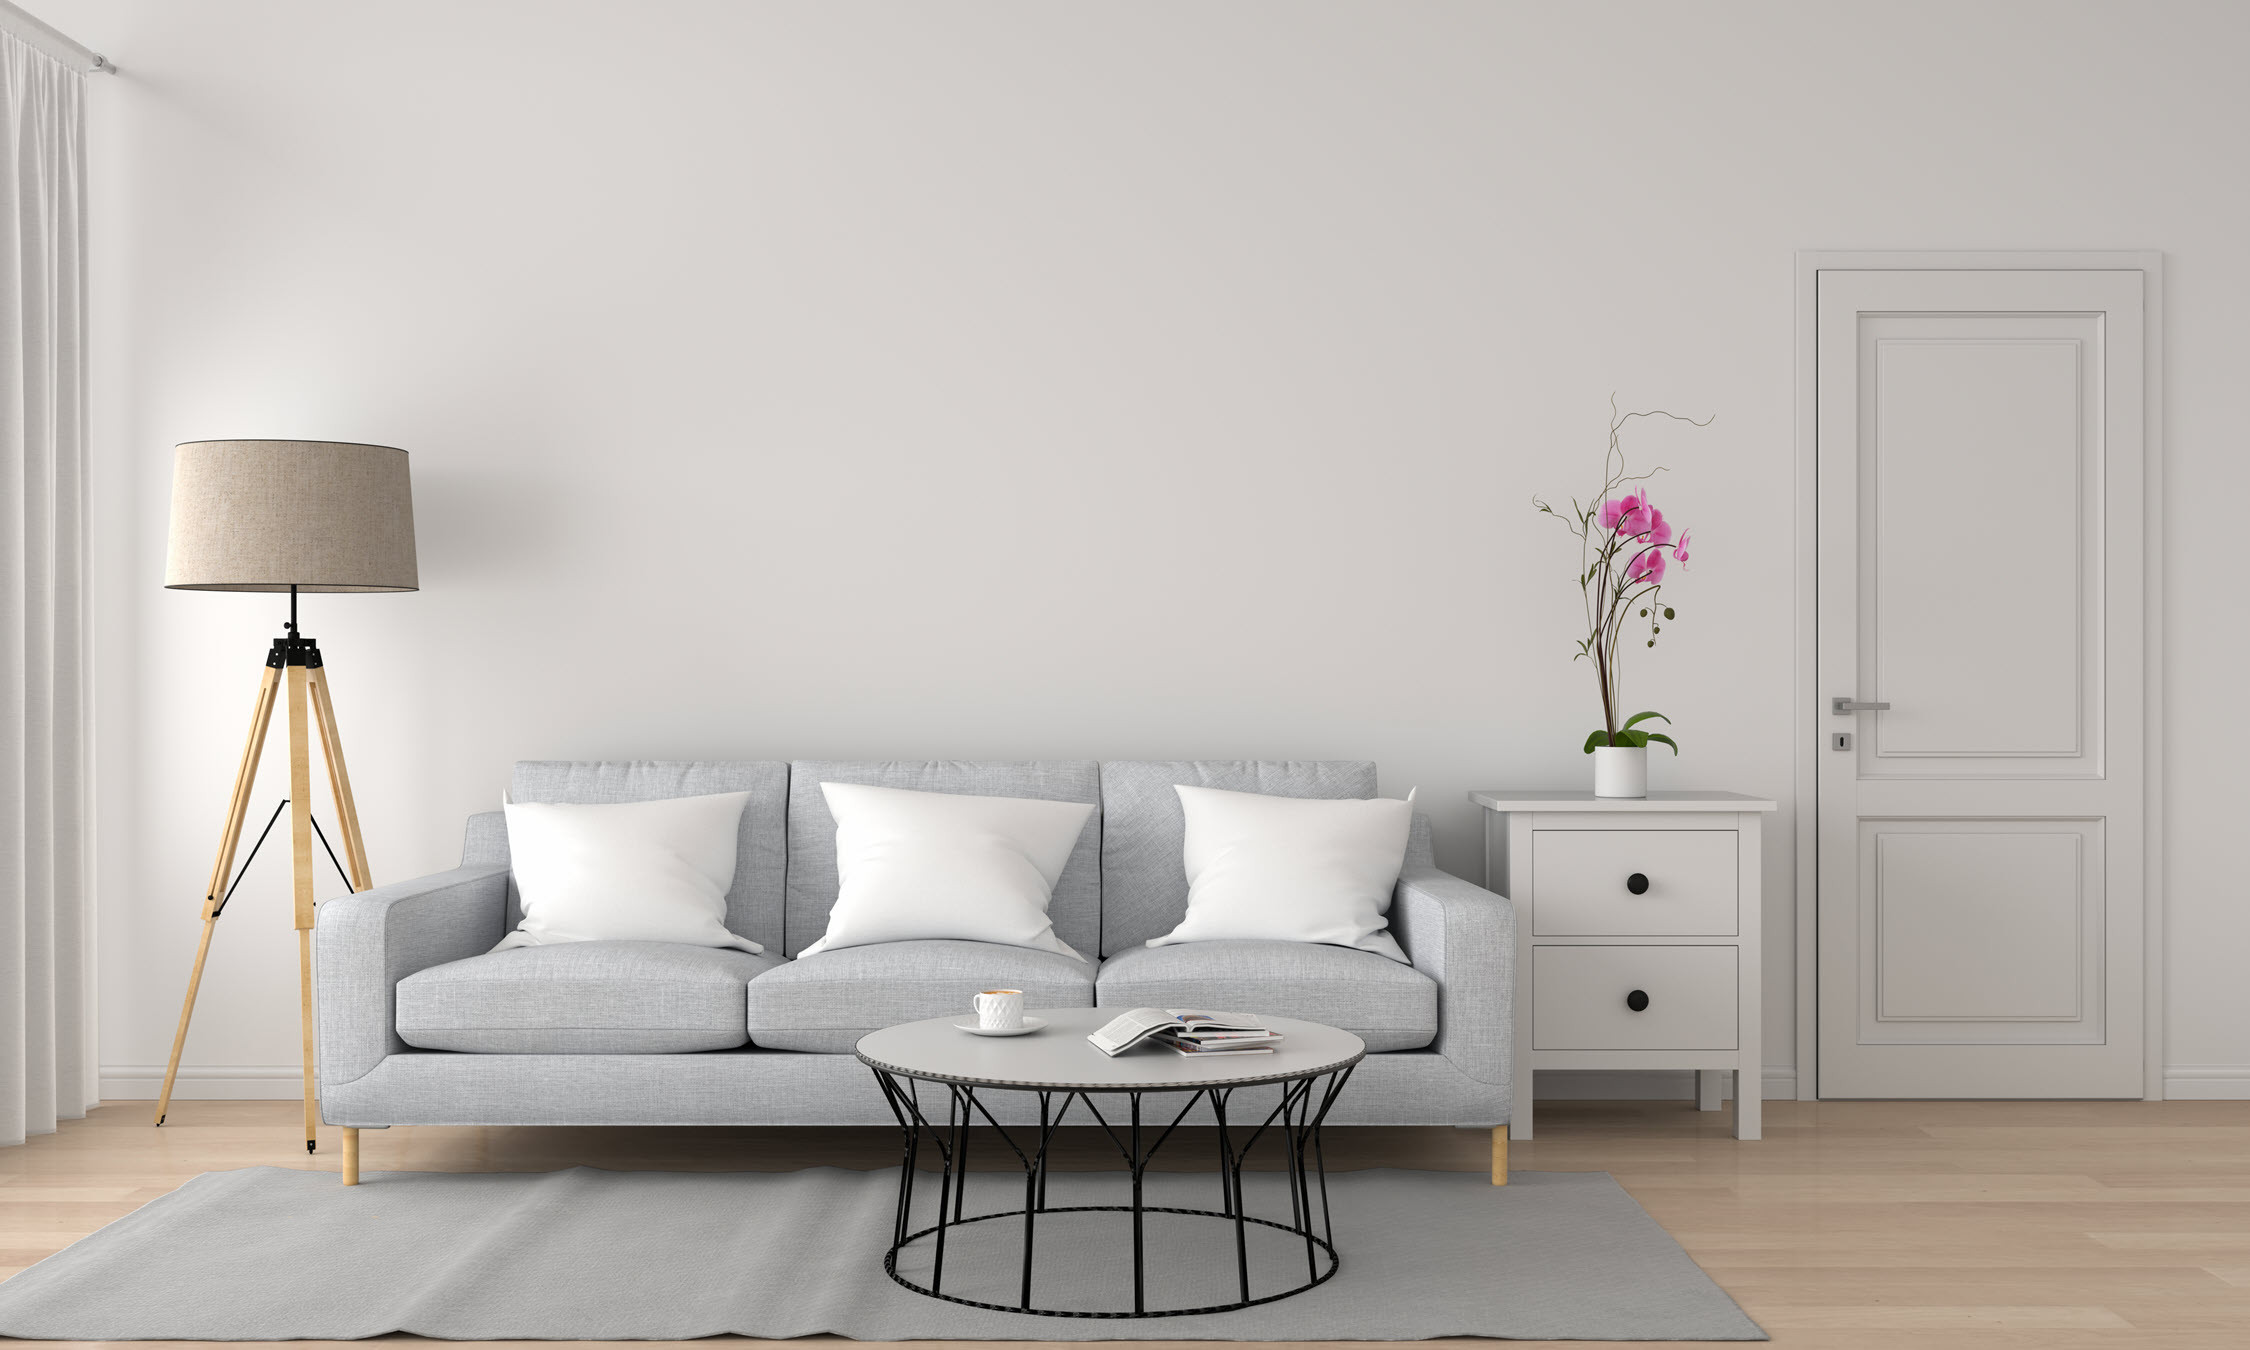 Minimalist Design Living Room
 How To Easily Create The Perfect Minimalist Living Room